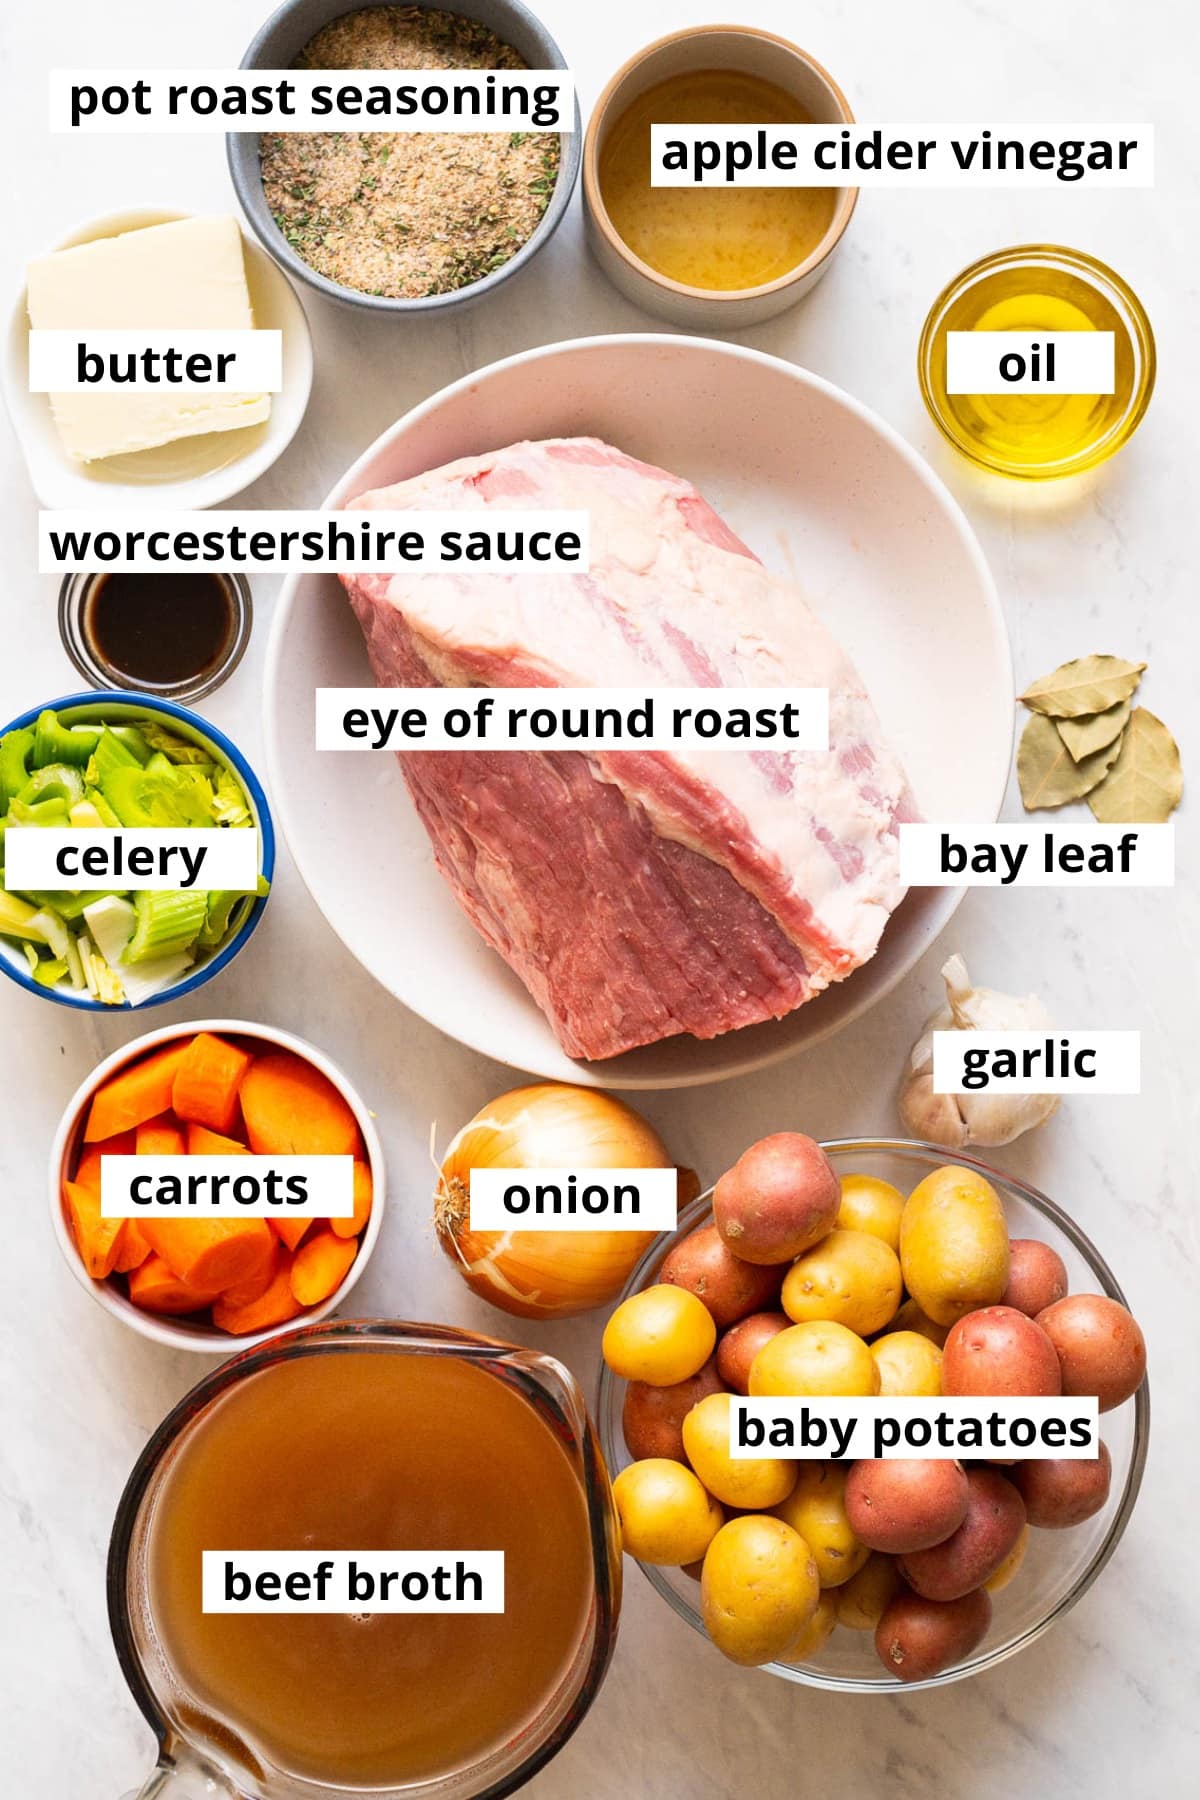 Eye of round roast, celery, carrots, onion, baby potatoes, beef broth, garlic, bay leaf, Worcestershire sauce, butter, oil, apple cider vinegar, pot roast seasoning.